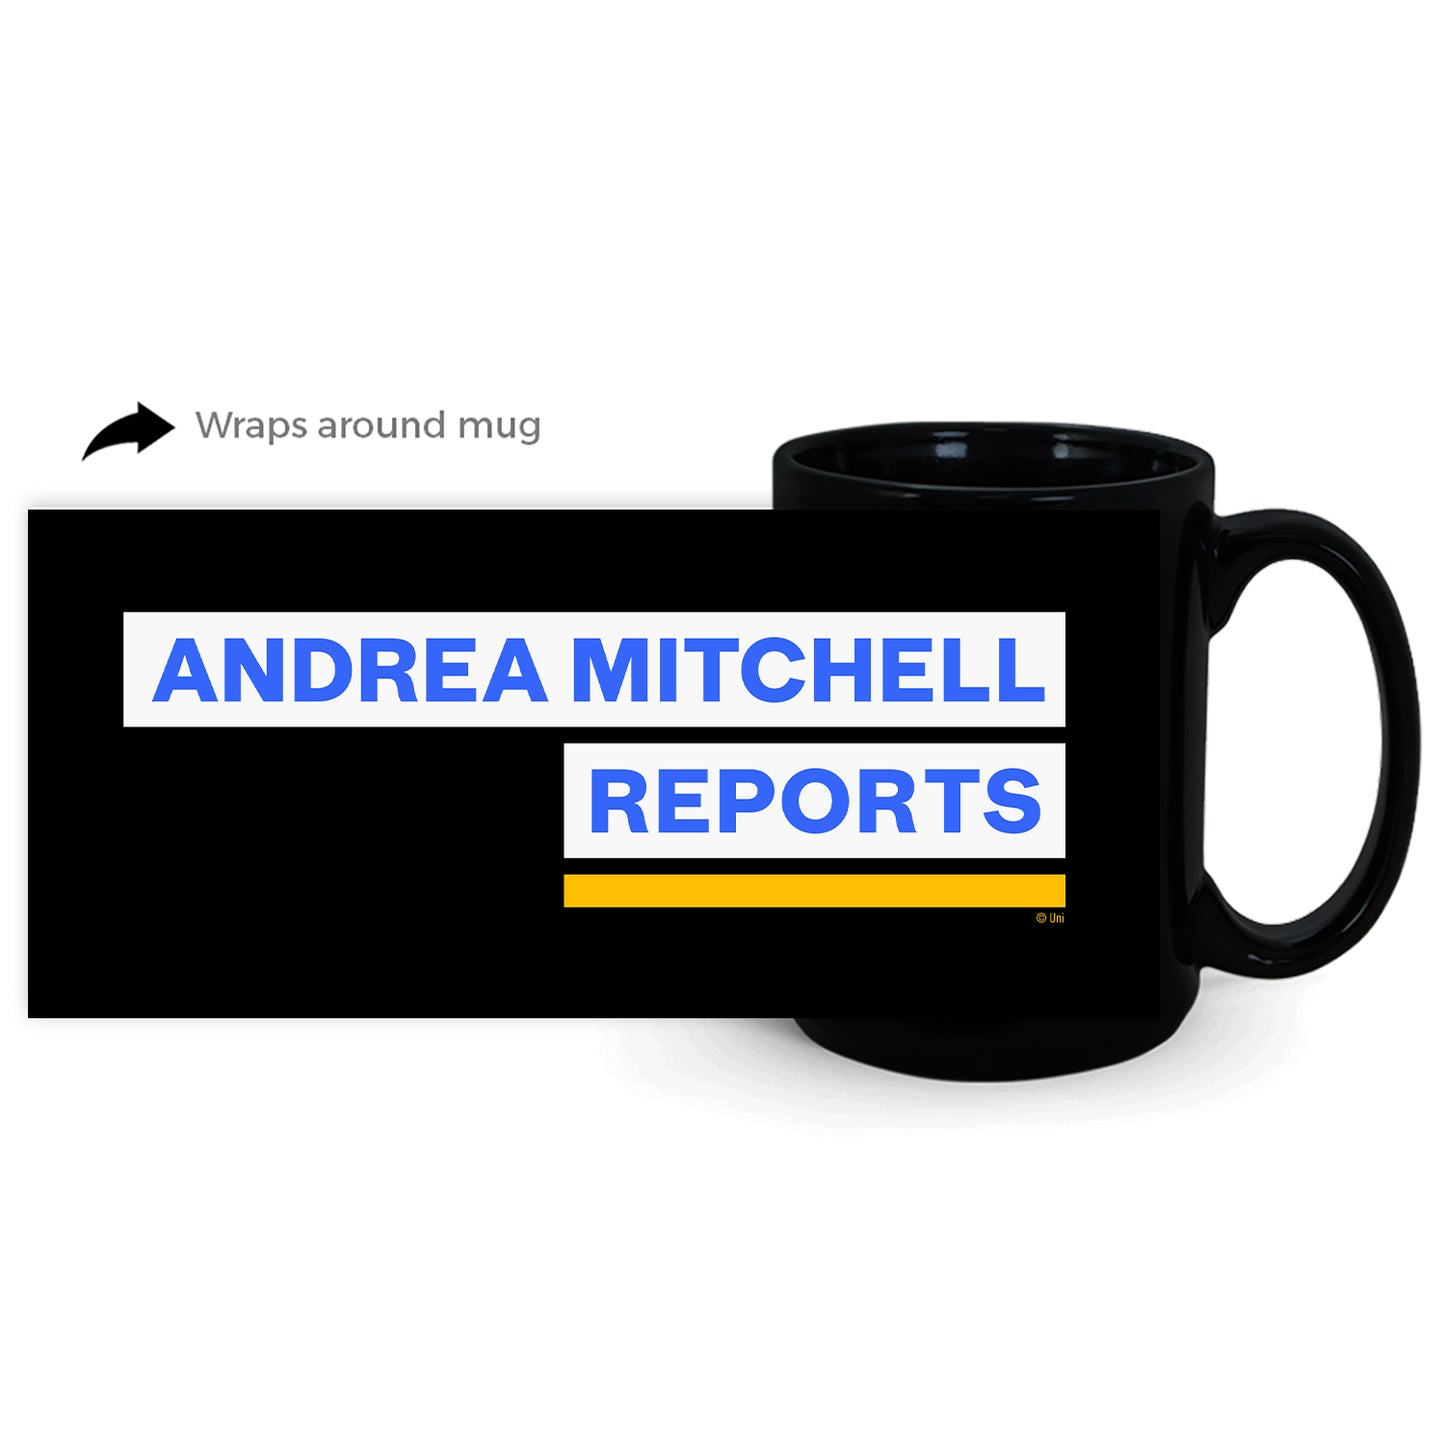 Andrea Mitchell Reports Black Mug